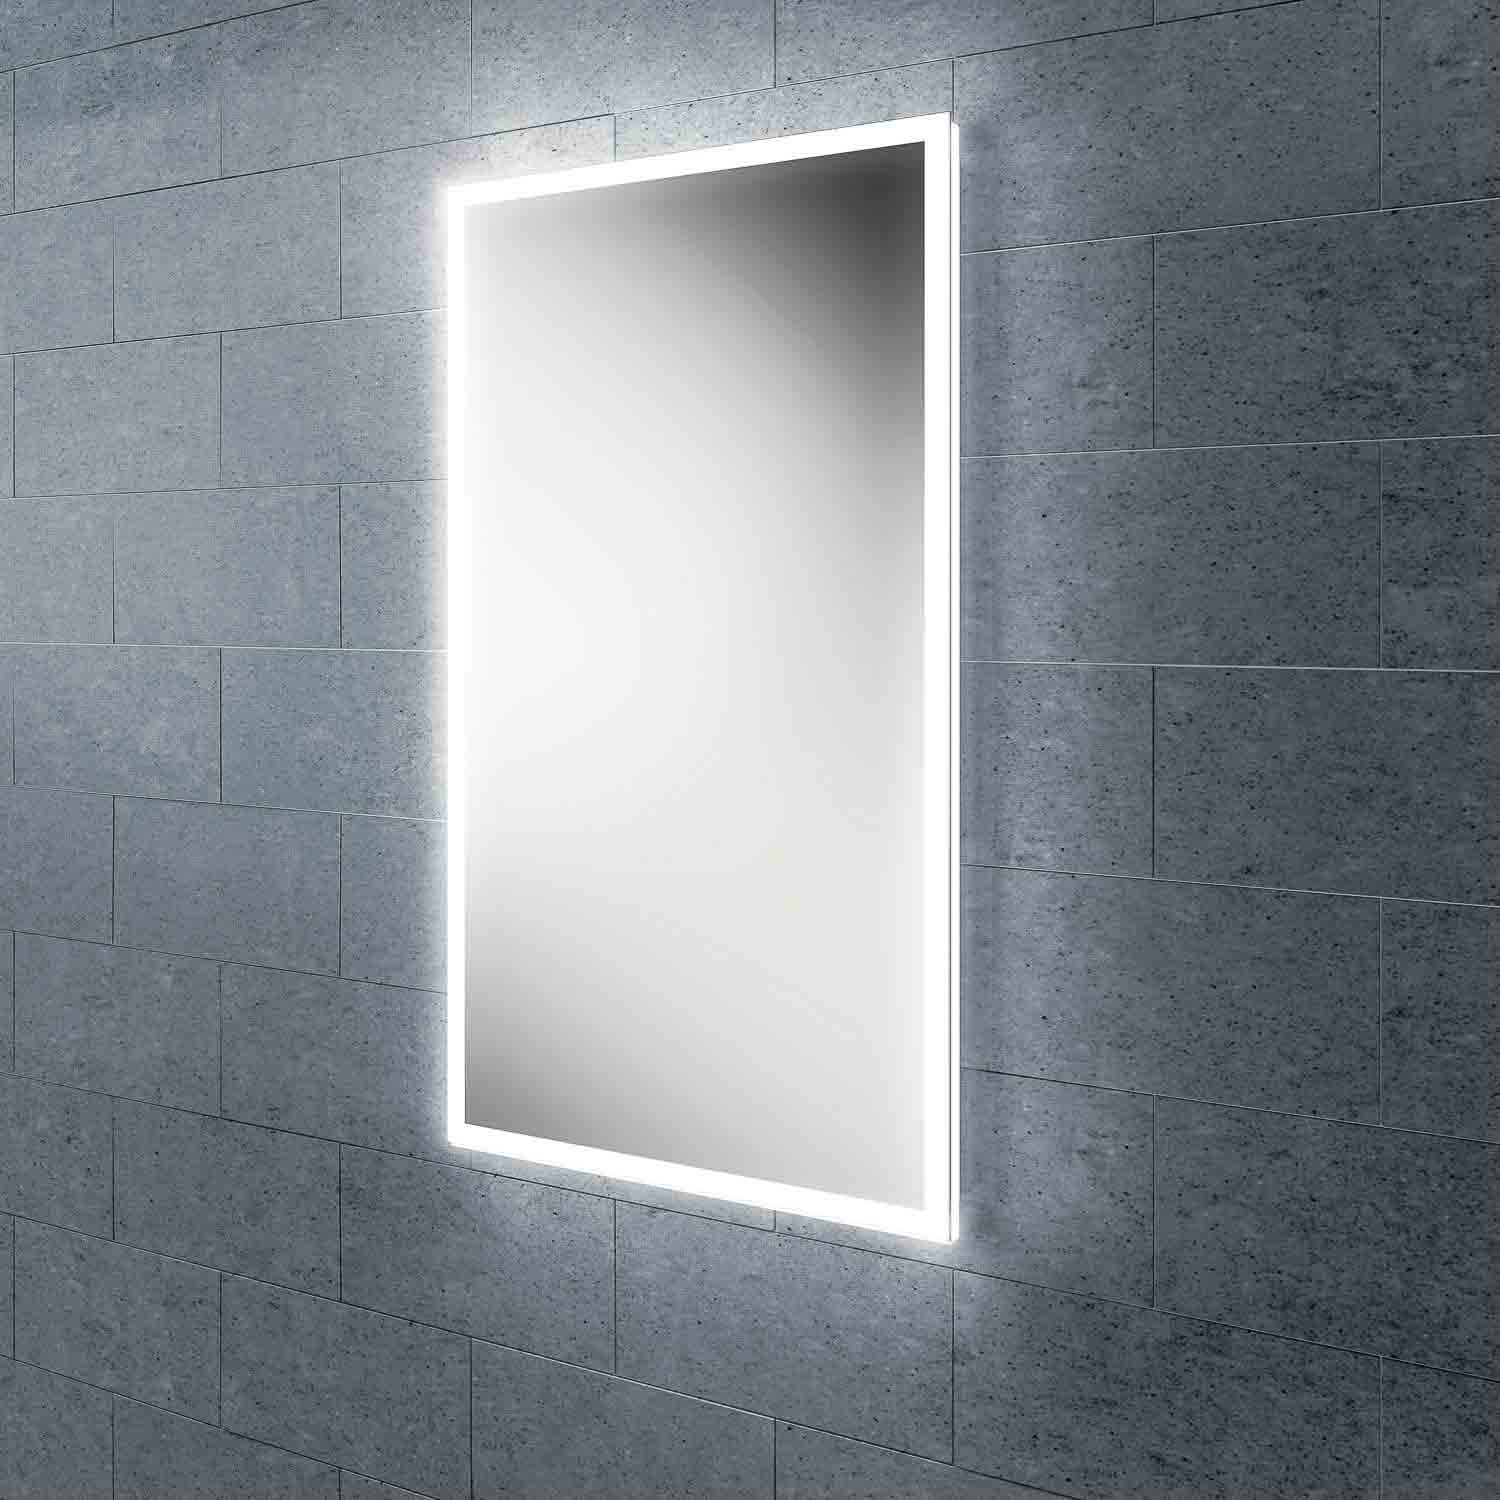 1400x600mm Front Lit LED Light Mirror lifestyle image